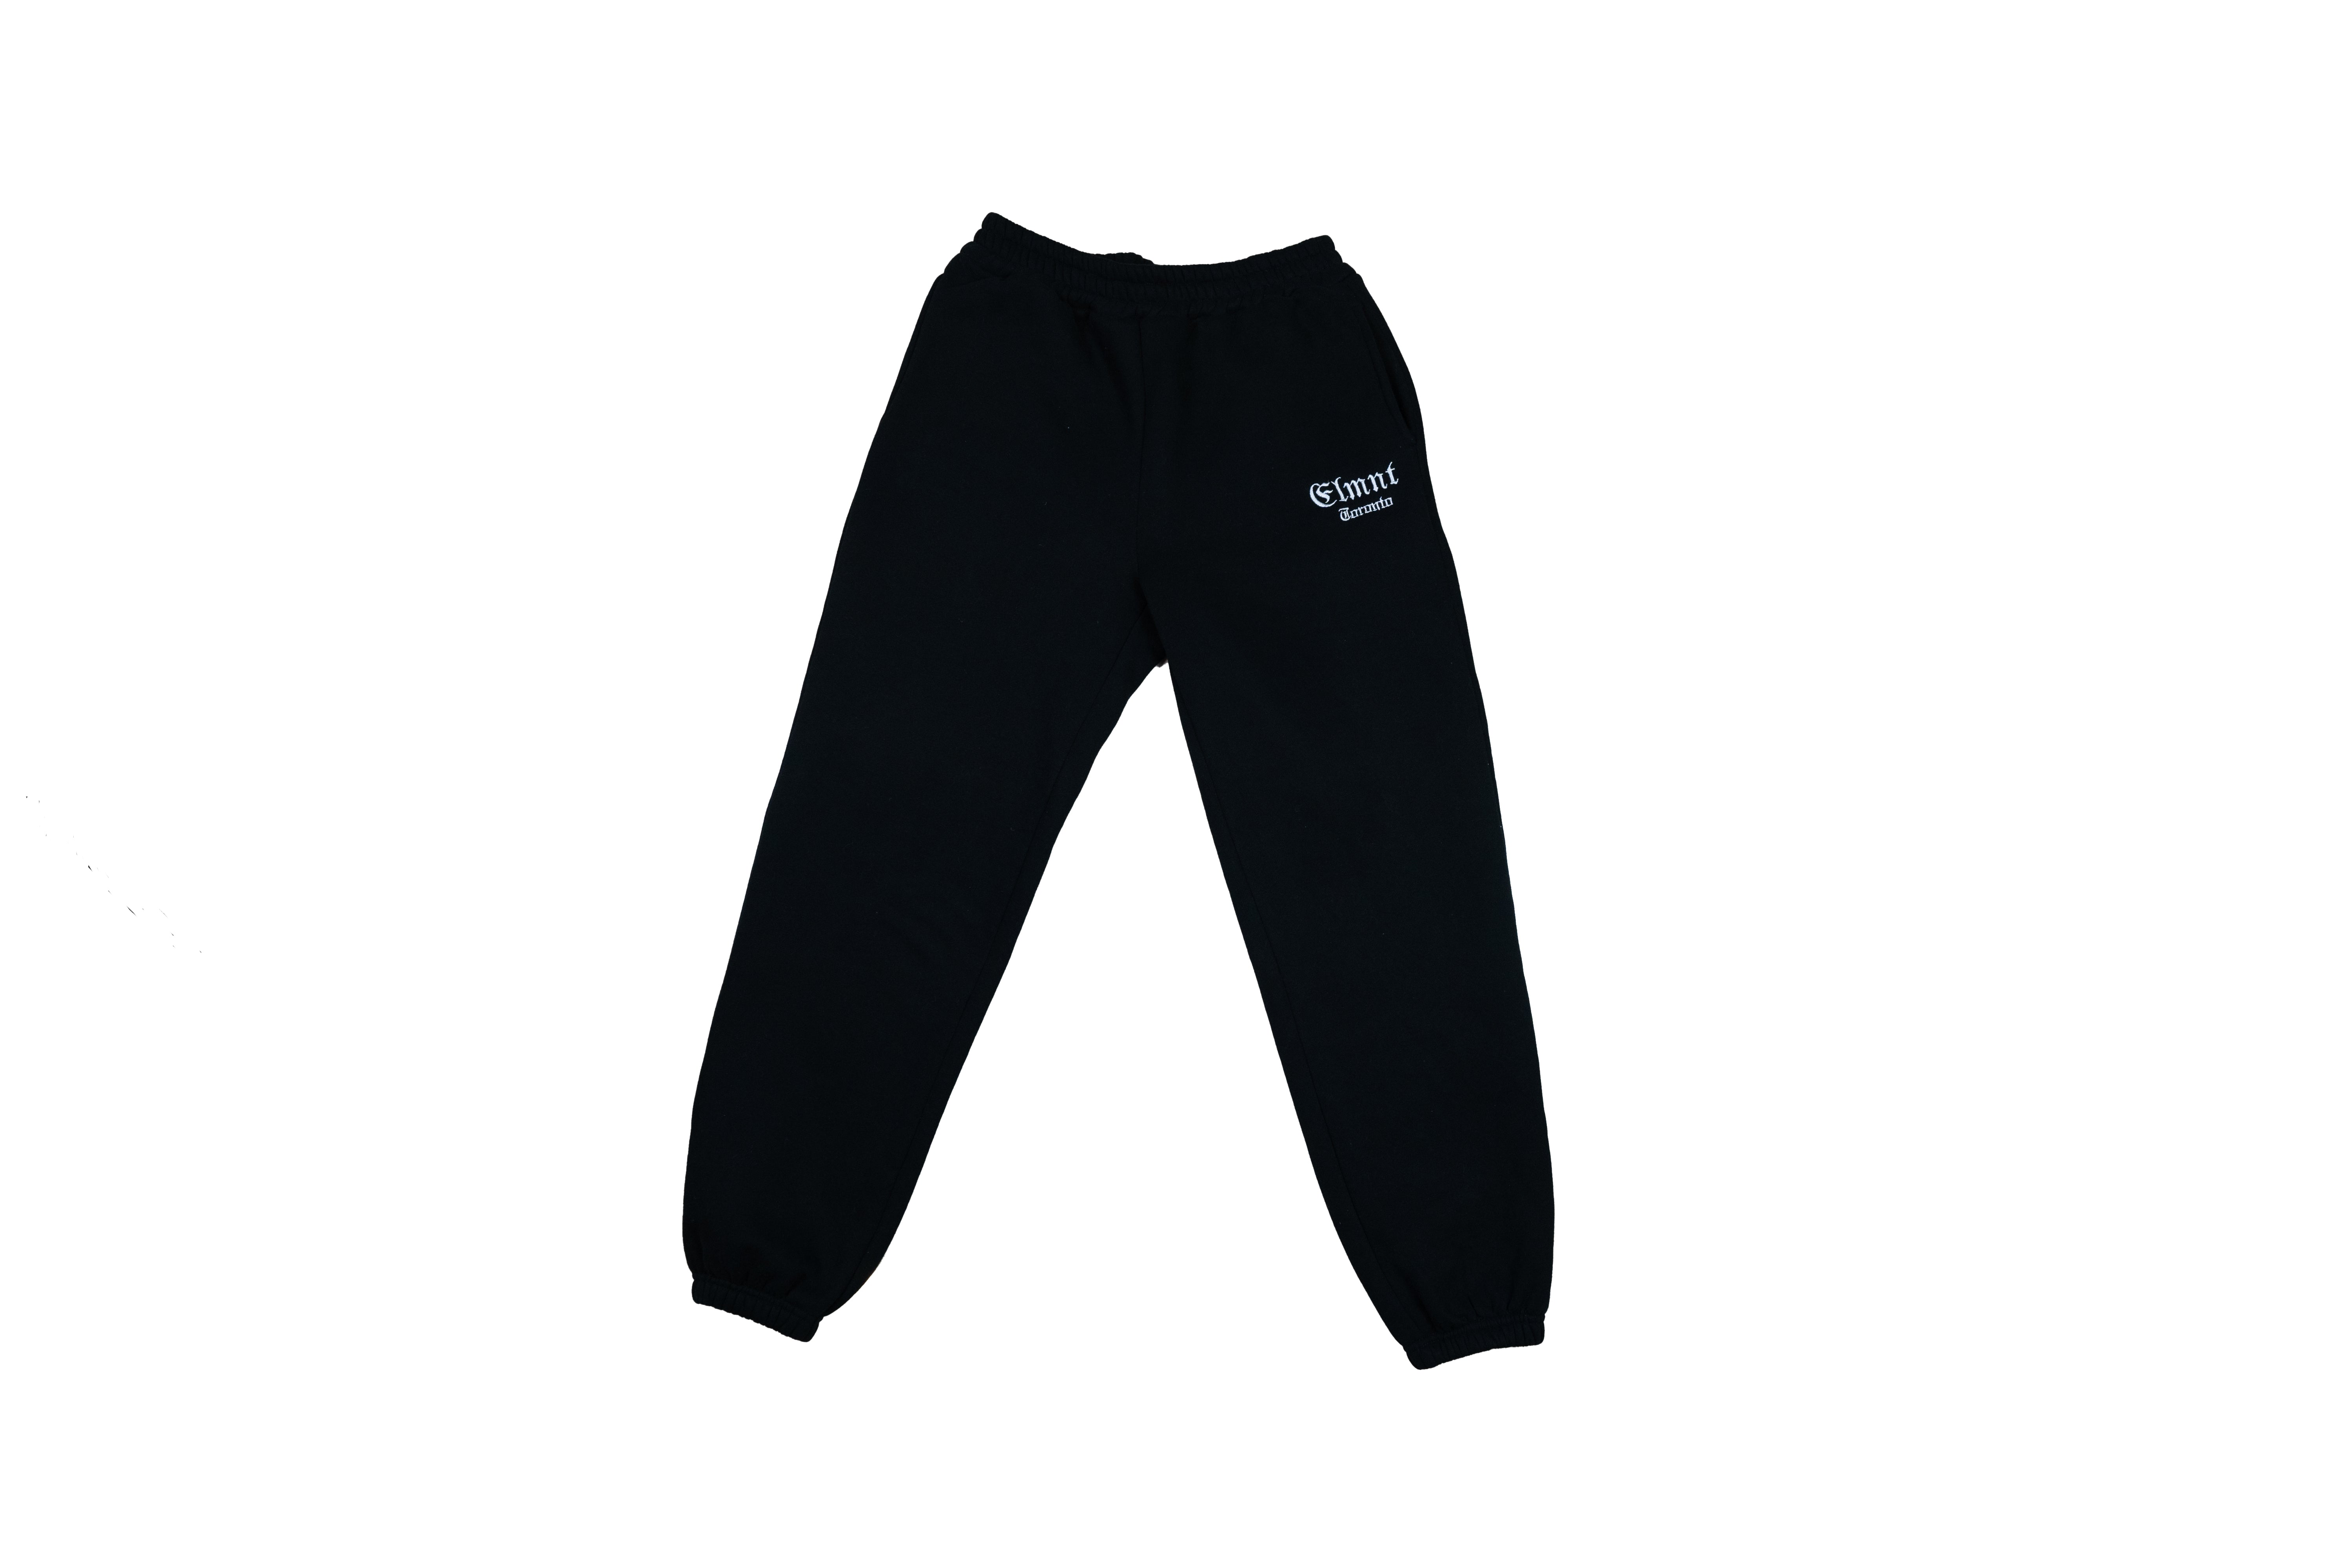 Souluxe Womens Black Polyester Sweatpants Leggings Size S L25 in